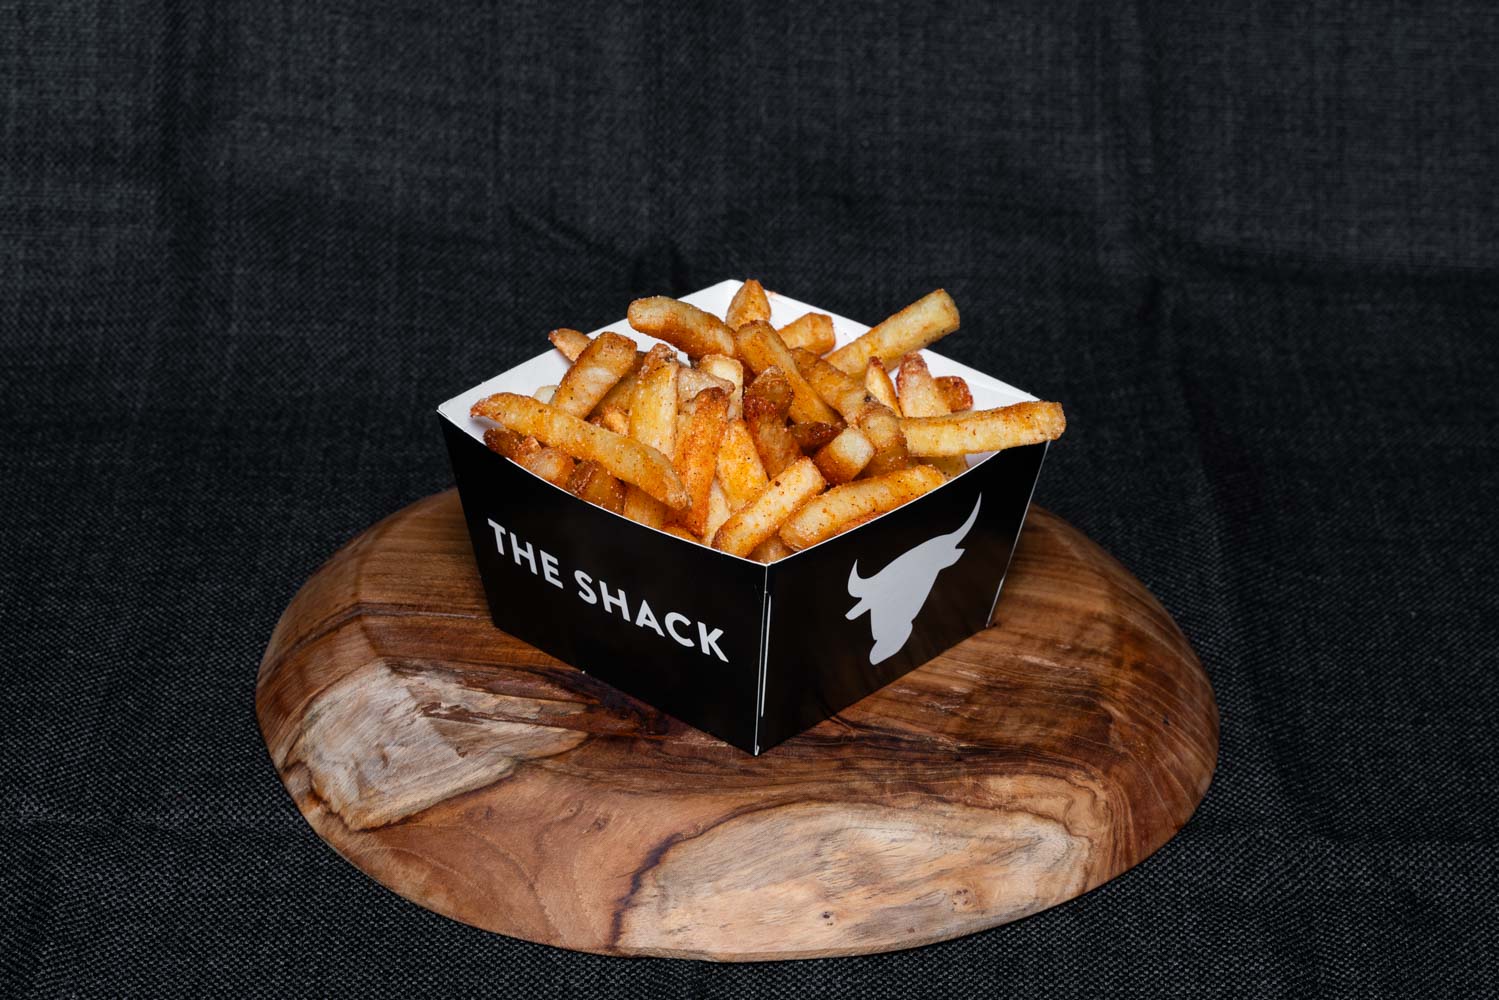 Shack fries